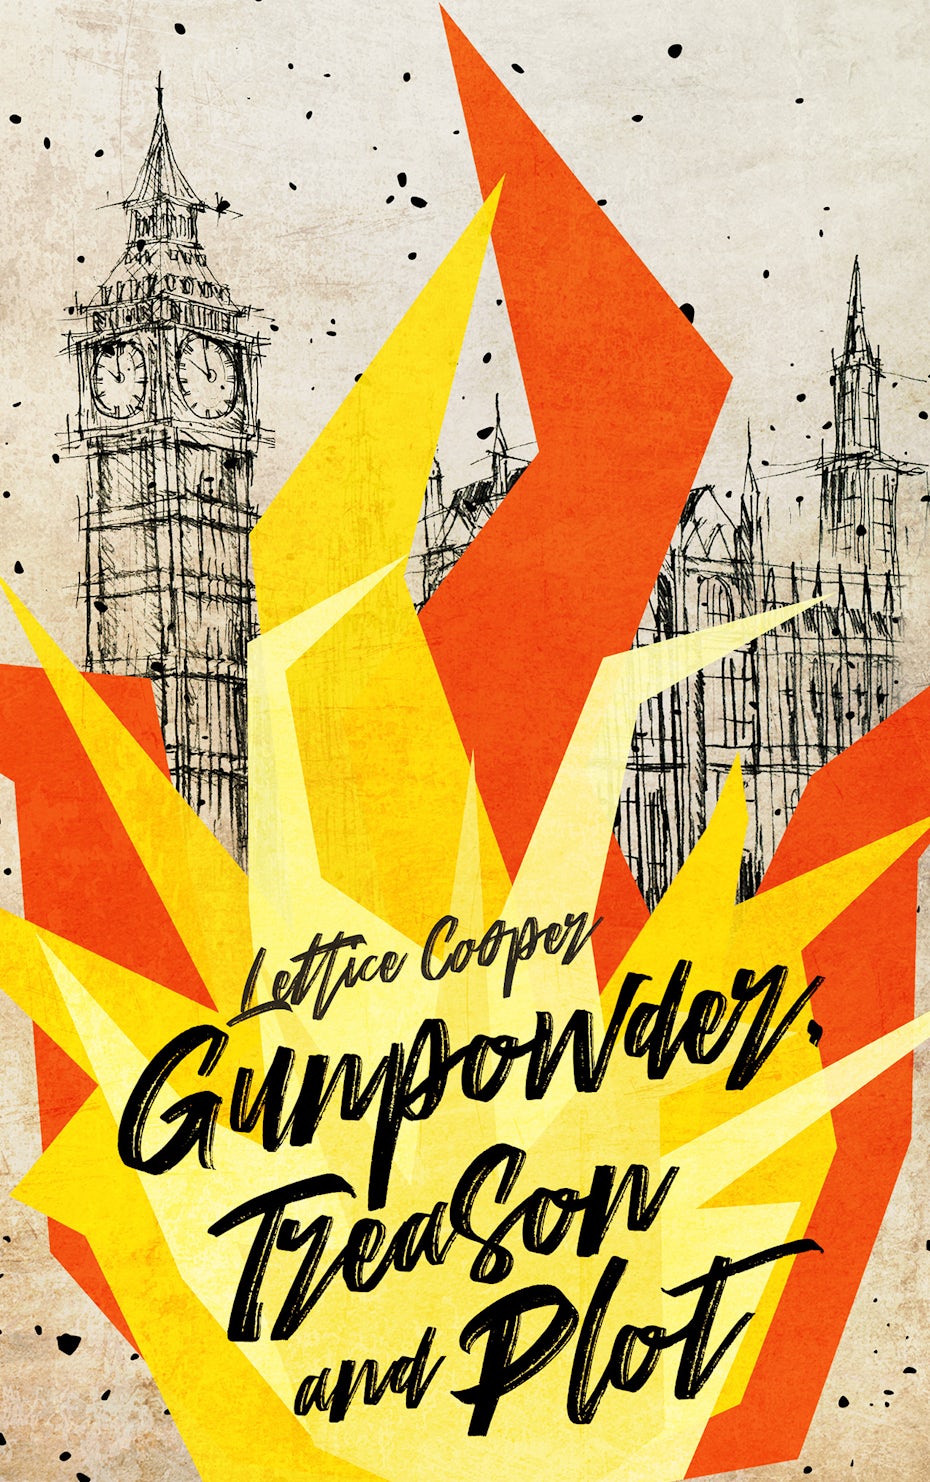 Gunpowder treason and plot book cover